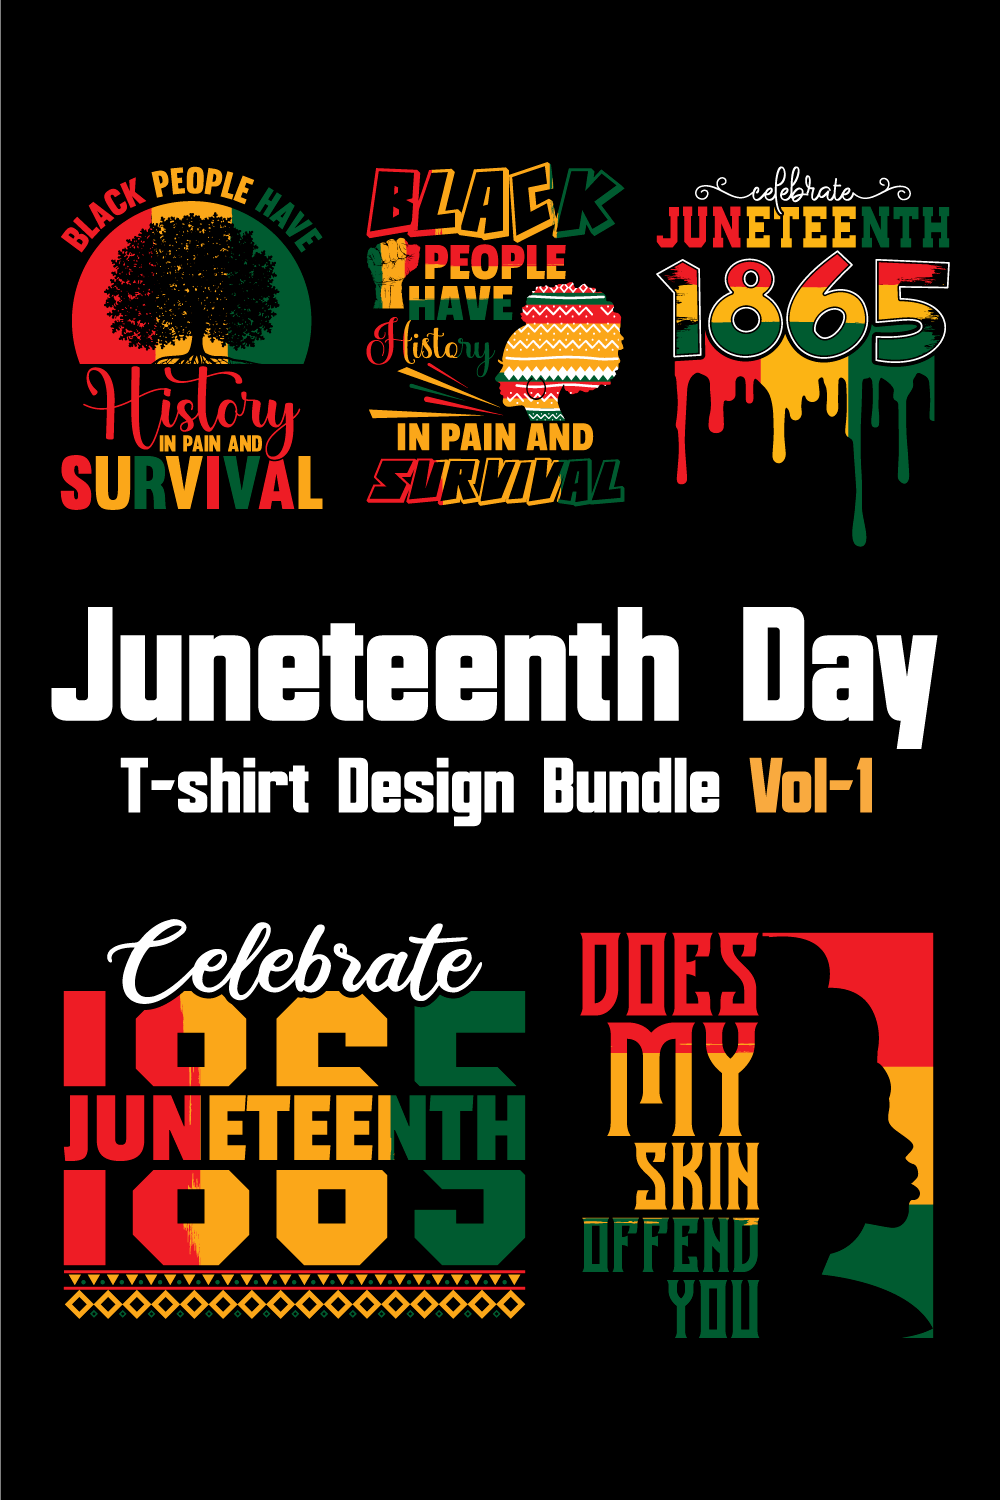 Juneteenth Day T-shirt Design Bundle Vol-1 pinterest preview image.